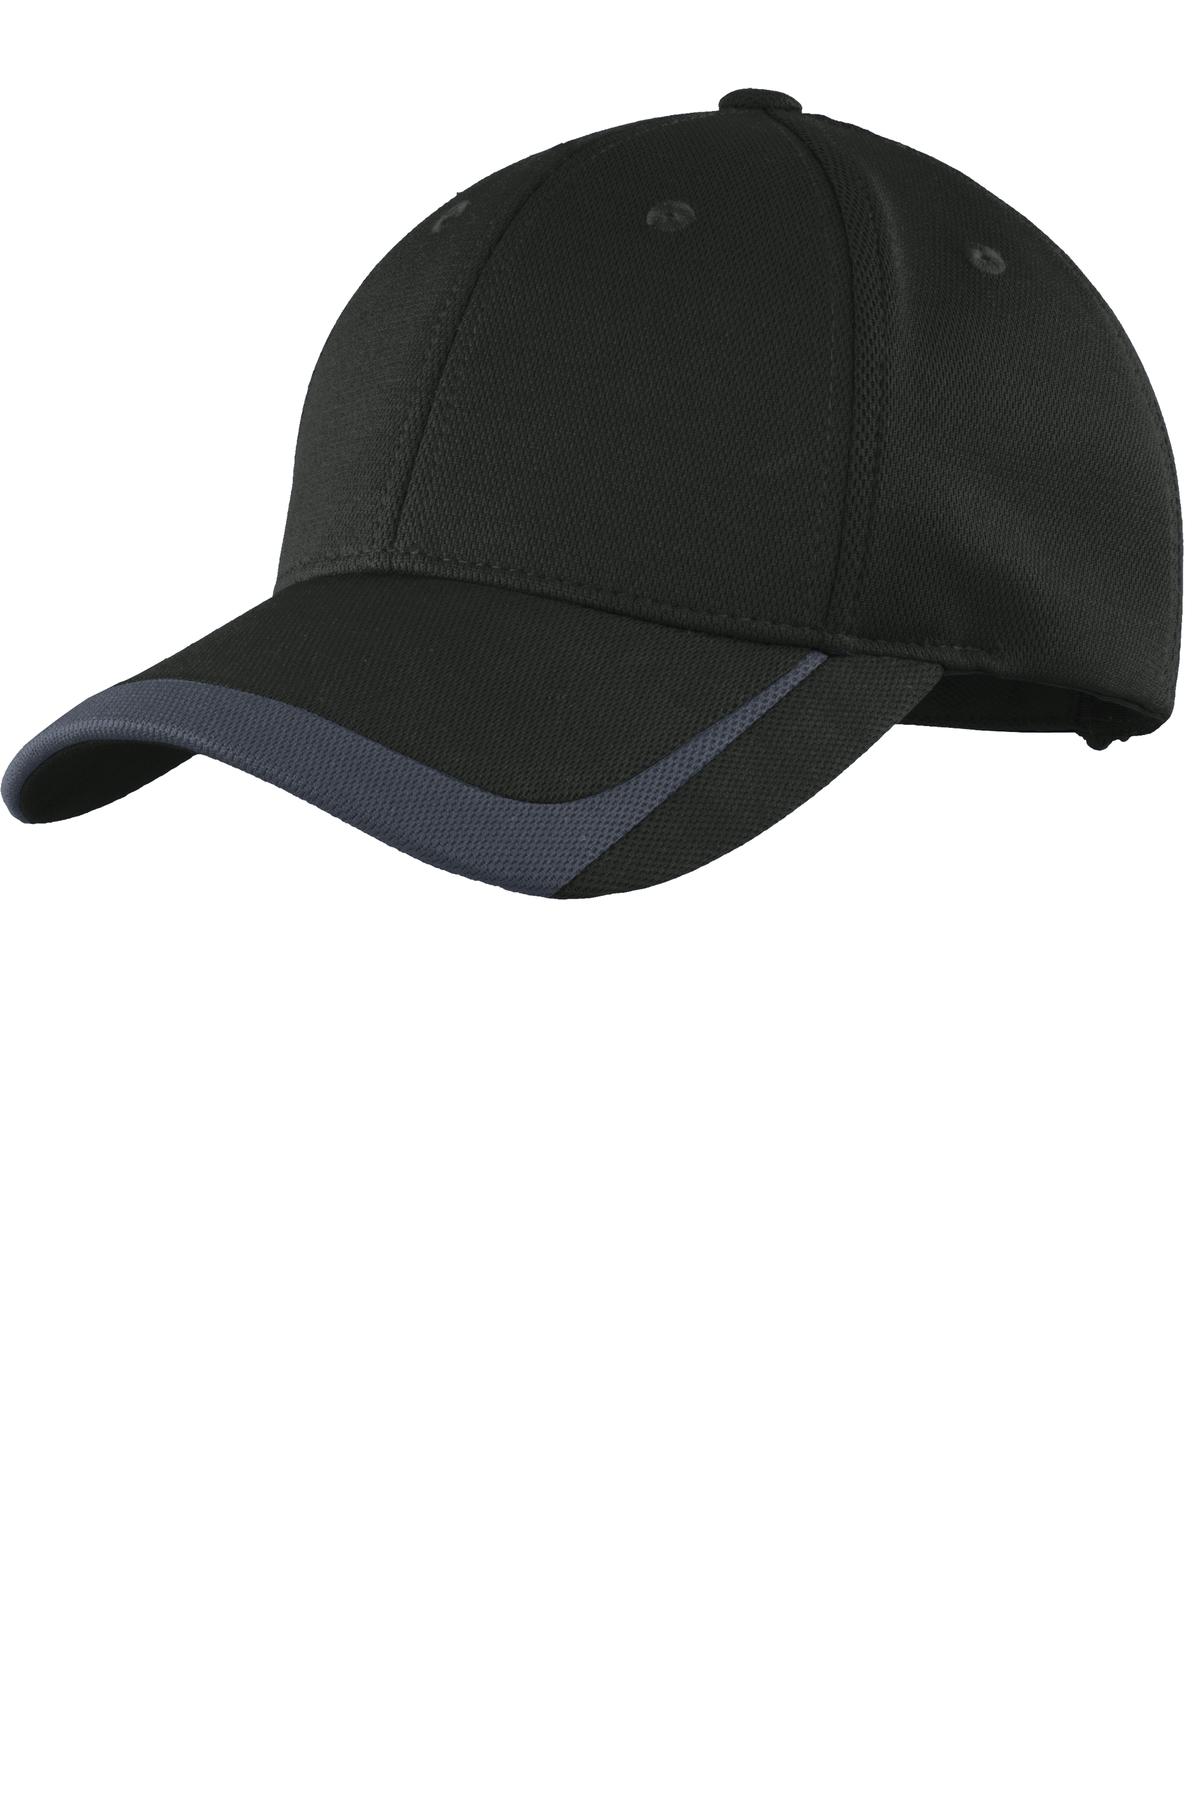 Sport-Tek Hospitality Caps ® Pique Colorblock Cap.-Sport-Tek